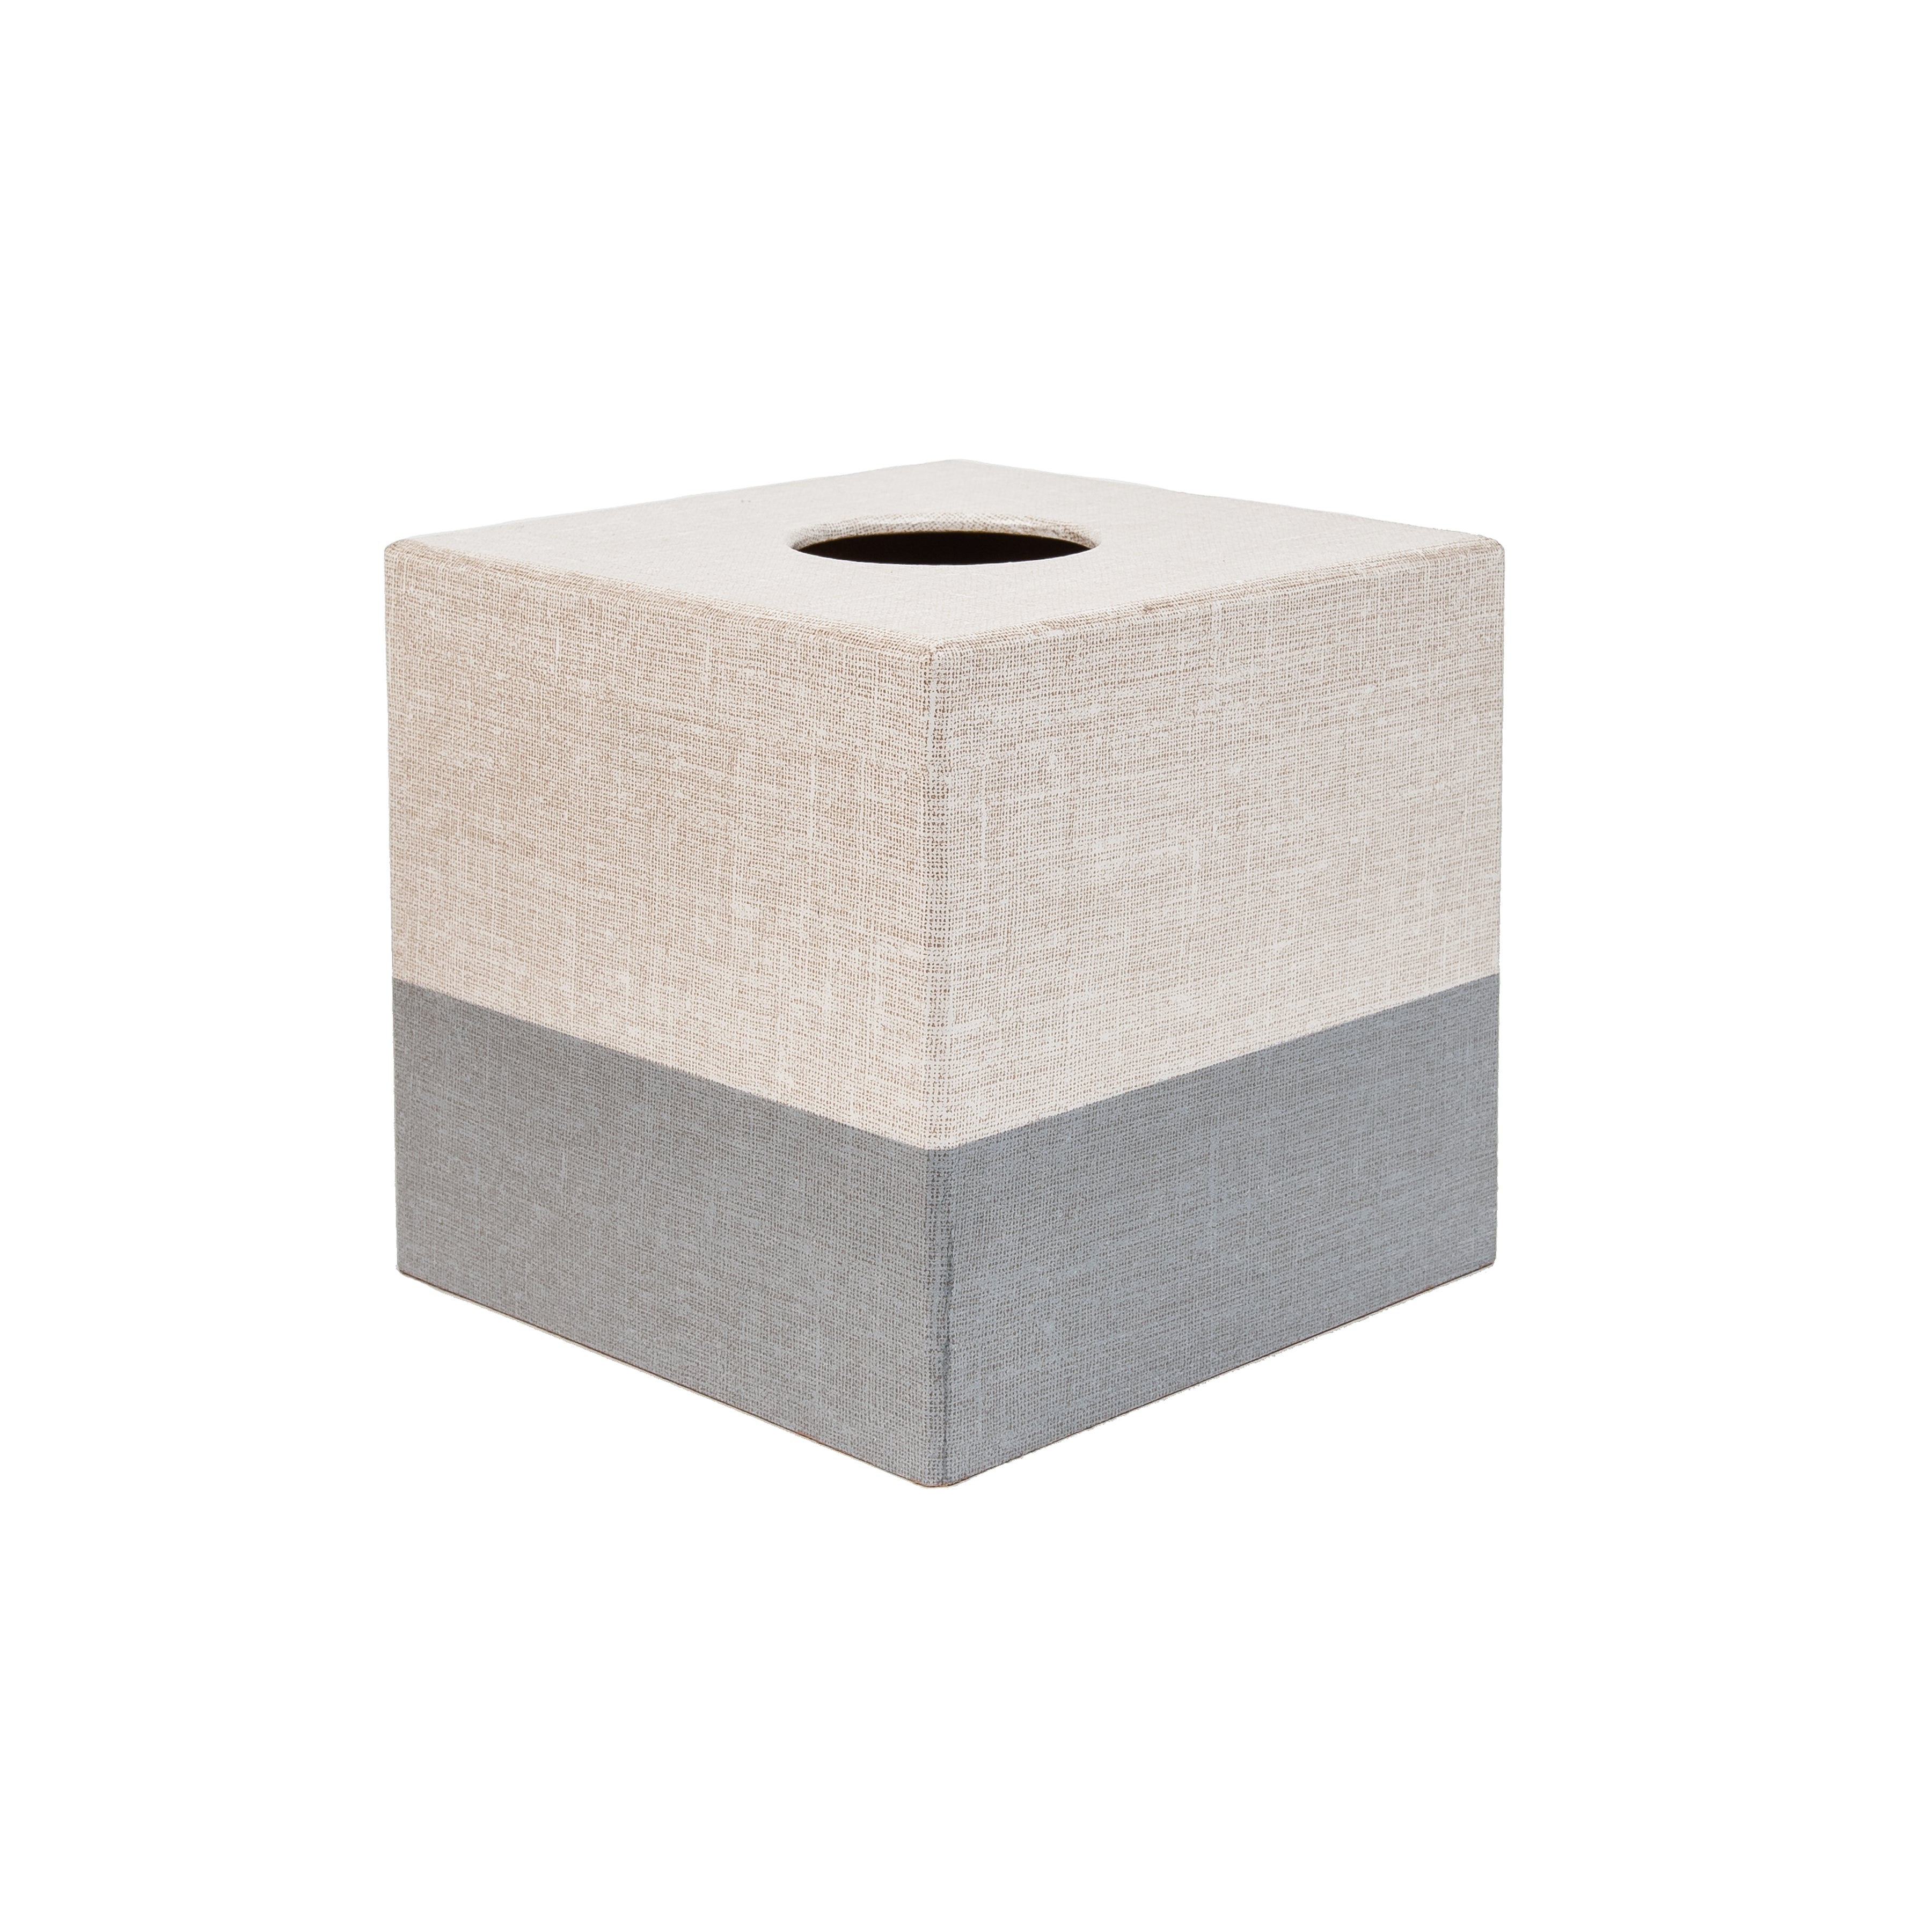 Grey Hessian wooden Tissue Box Cover & Waste Bin